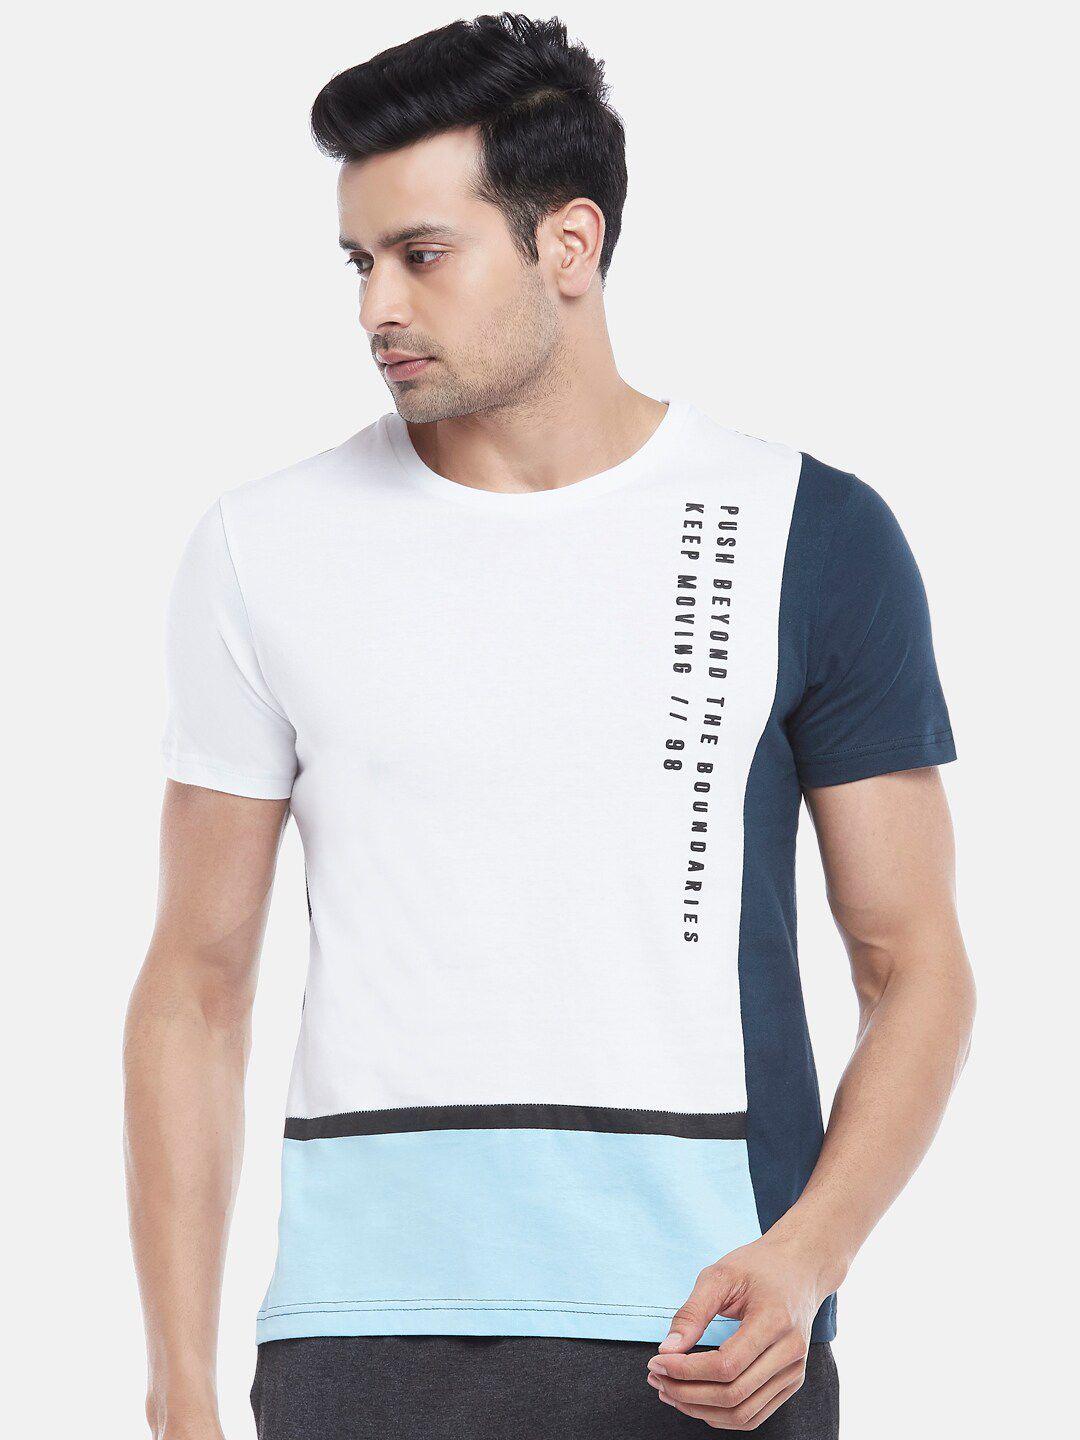 ajile by pantaloons men white & blue colourblocked slim fit t-shirt